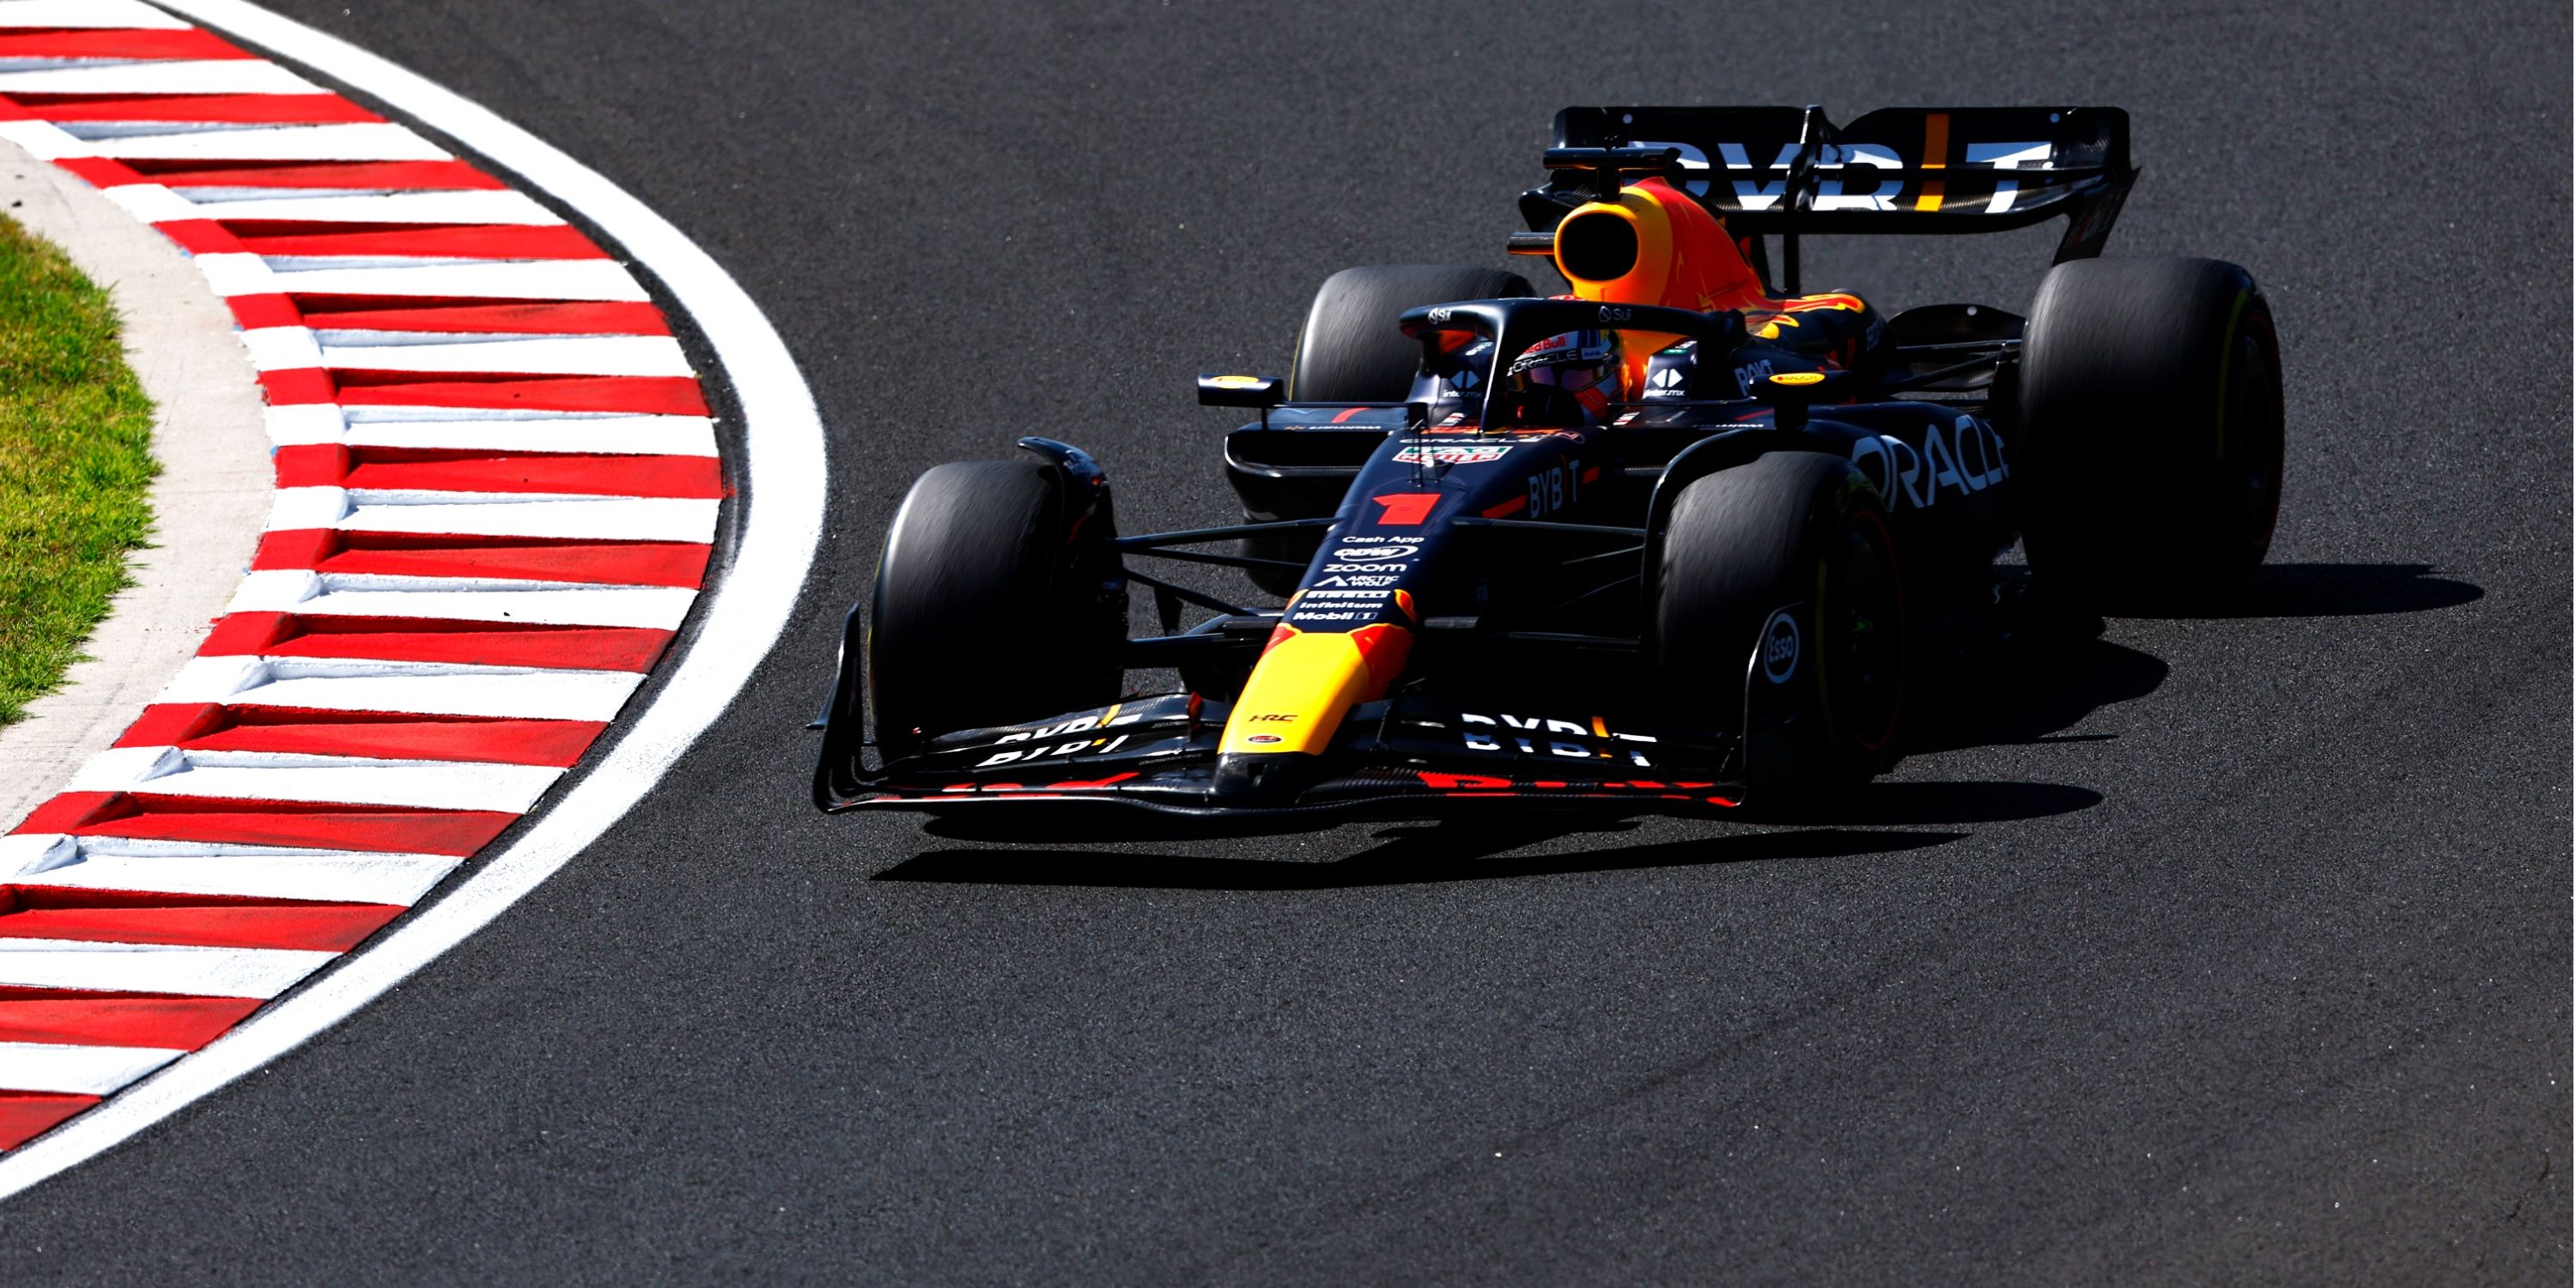 Max Verstappen leading the Hungarian Grand Prix